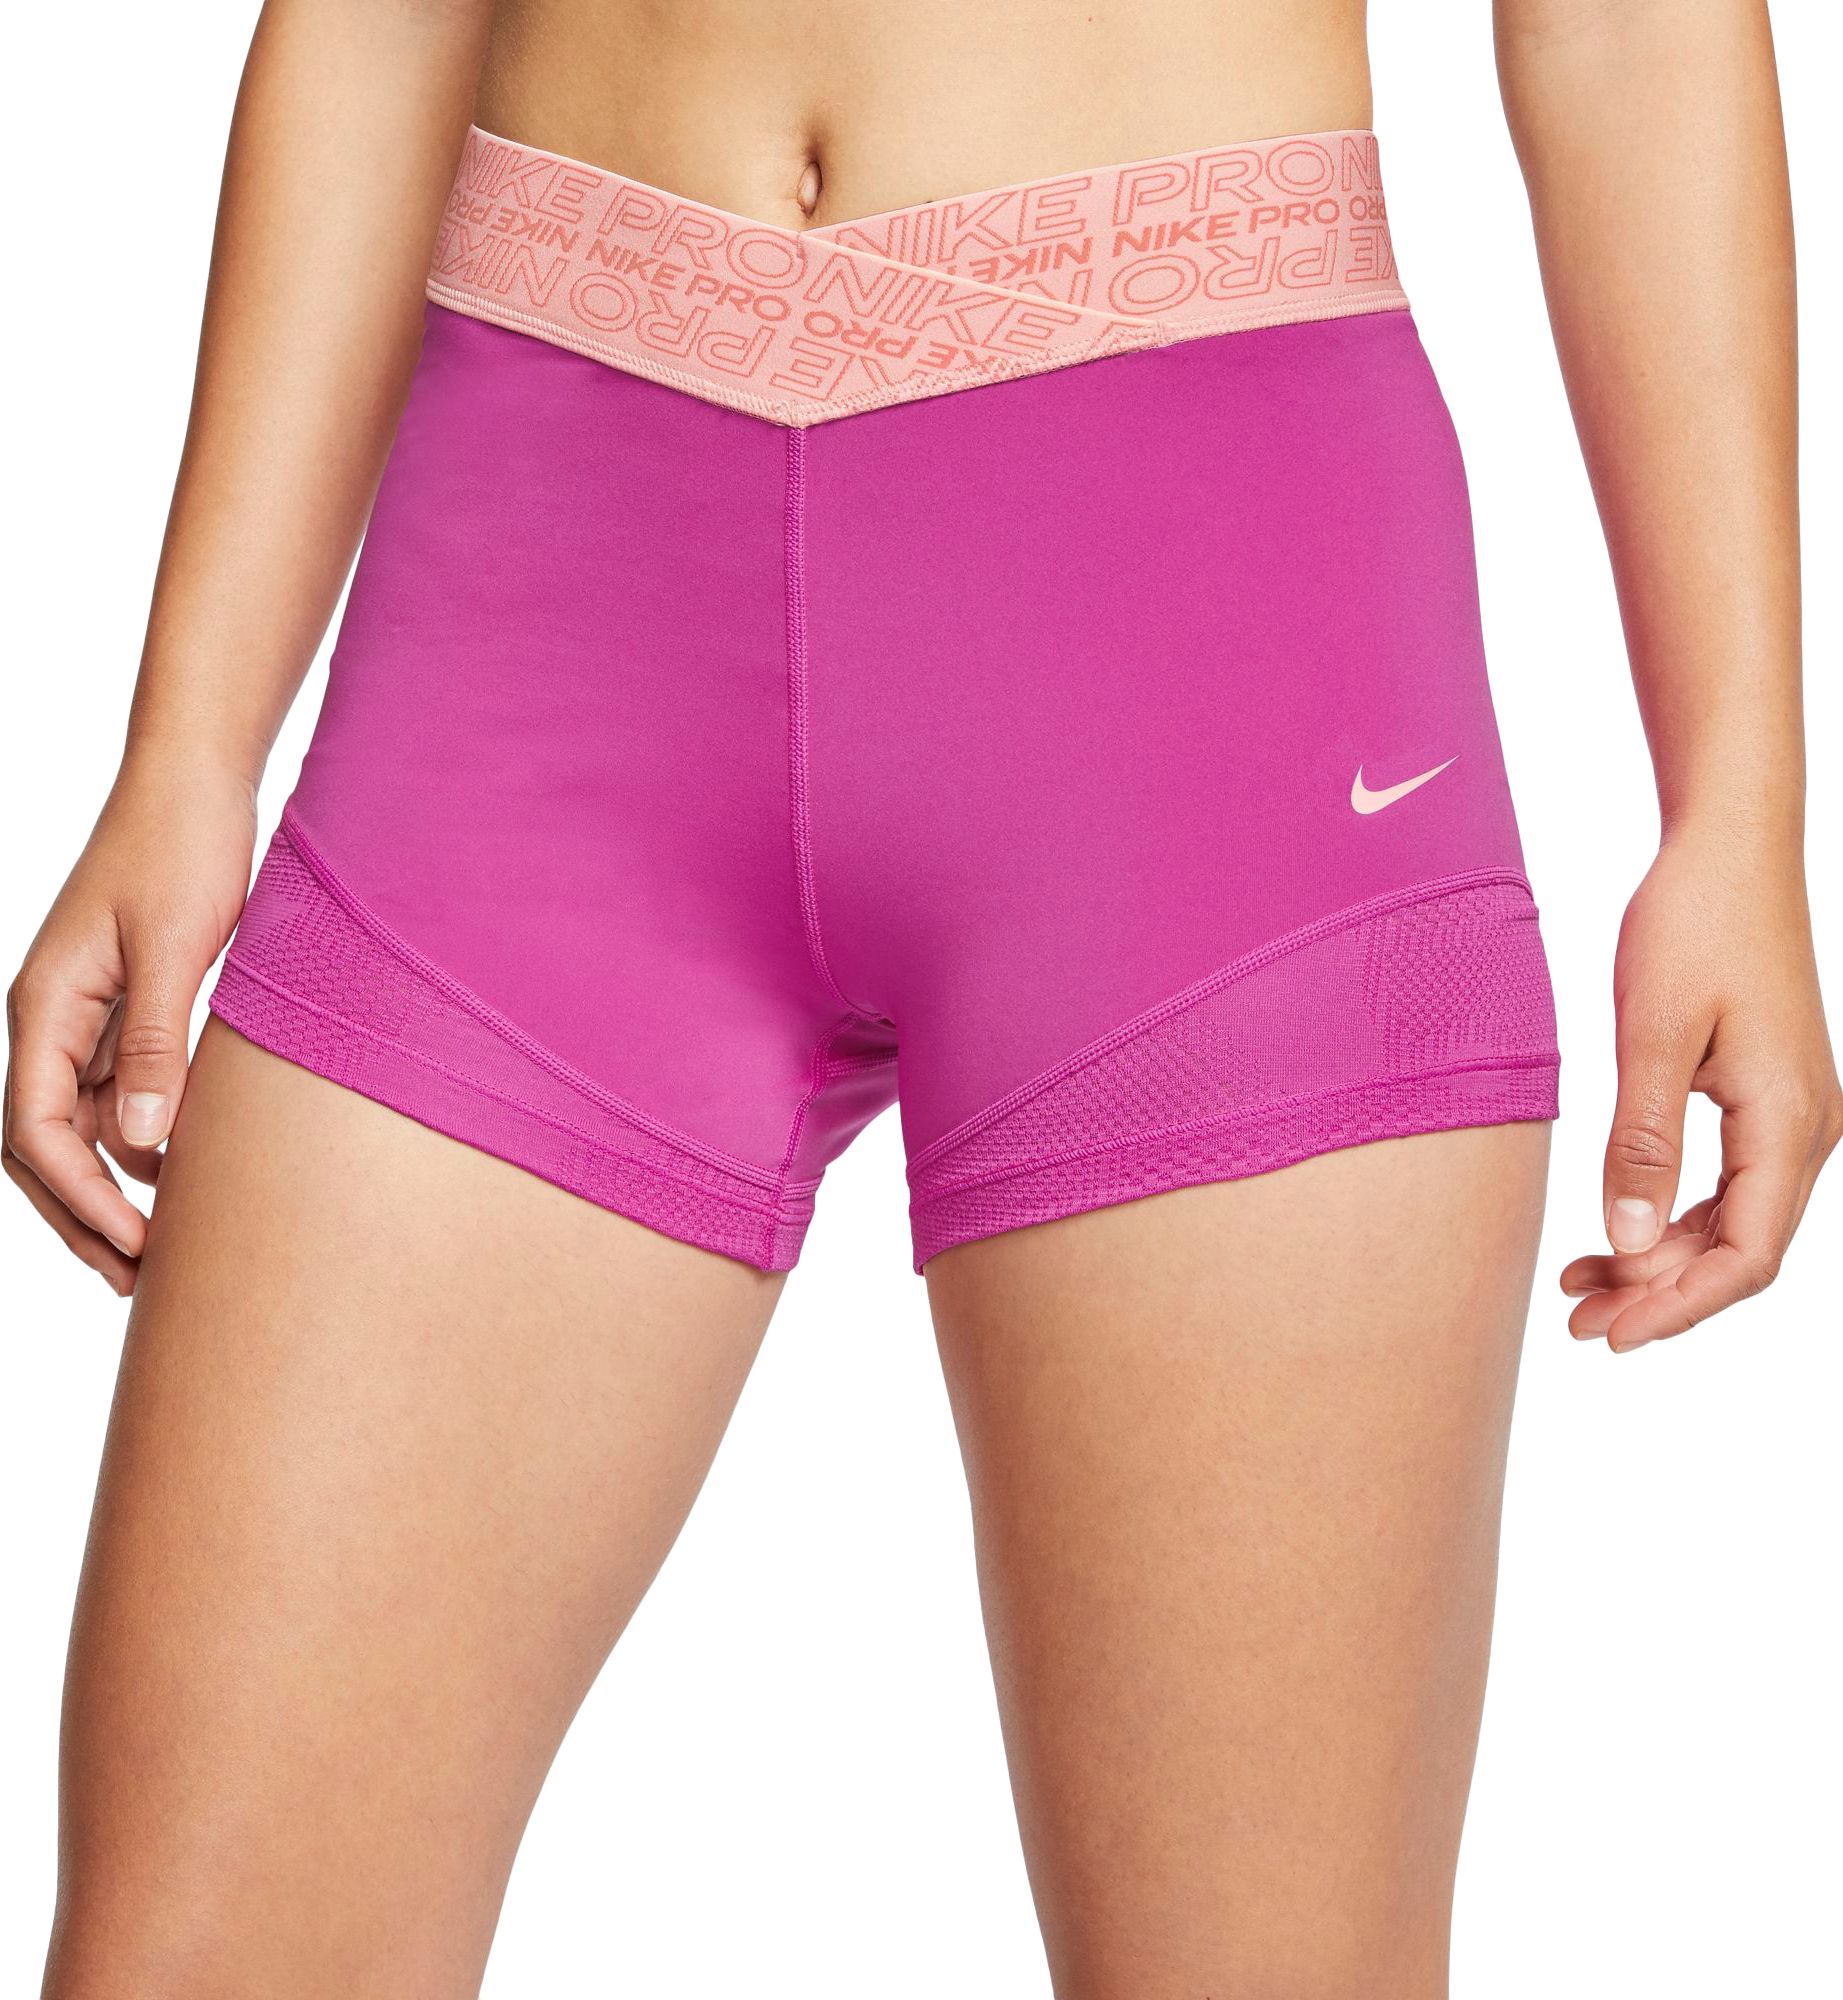 dicks sporting goods womens shorts